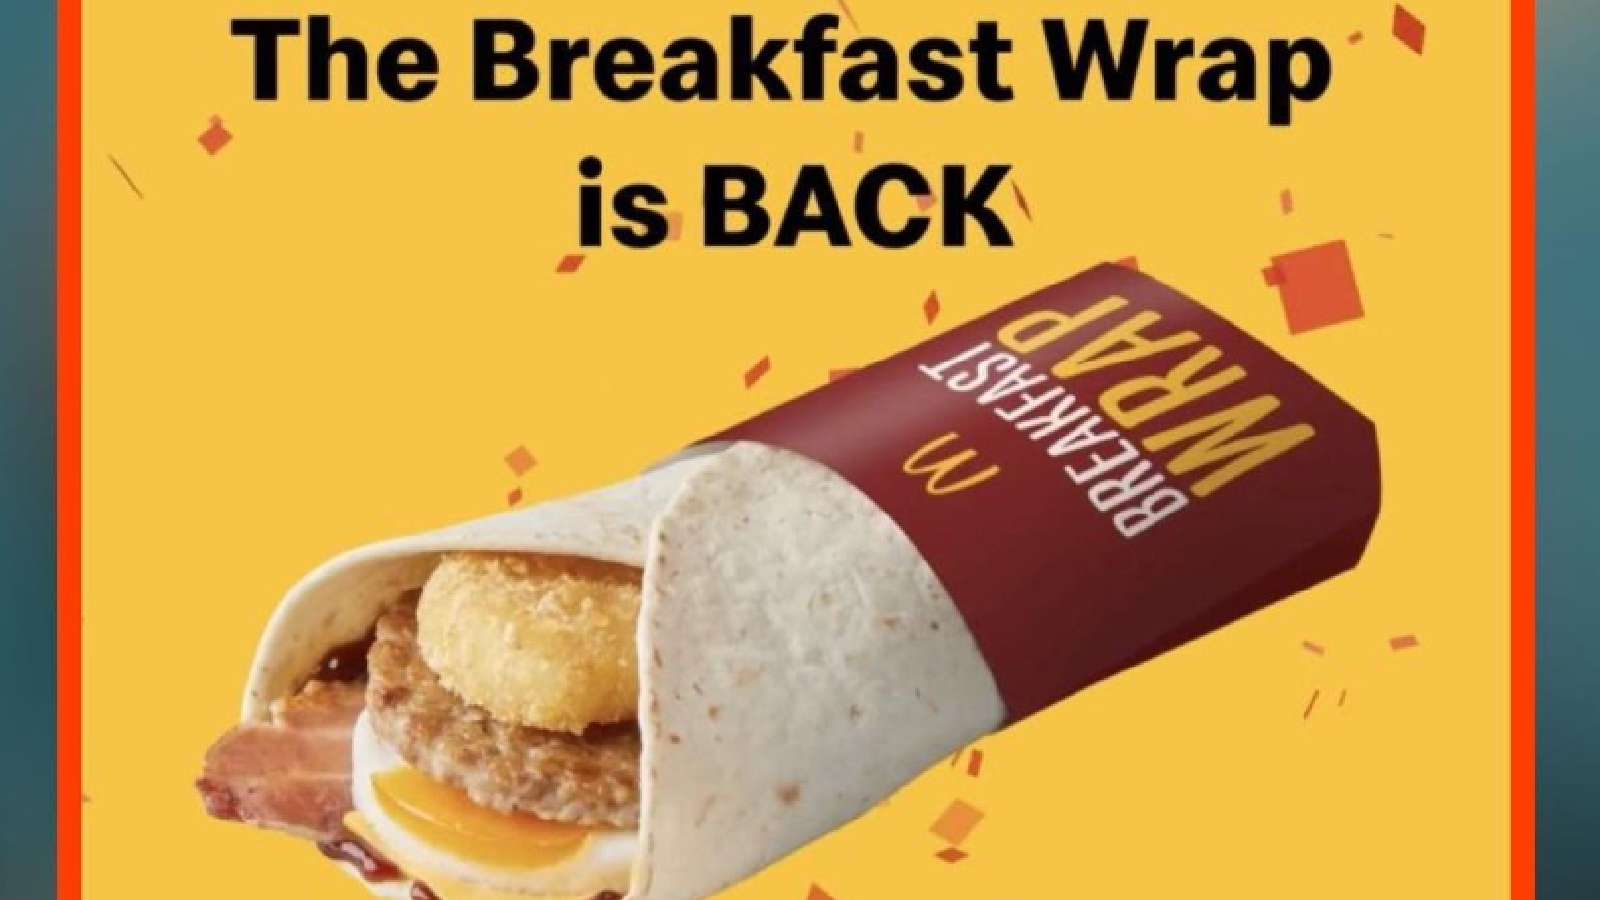 McDonald's breakfast wrap